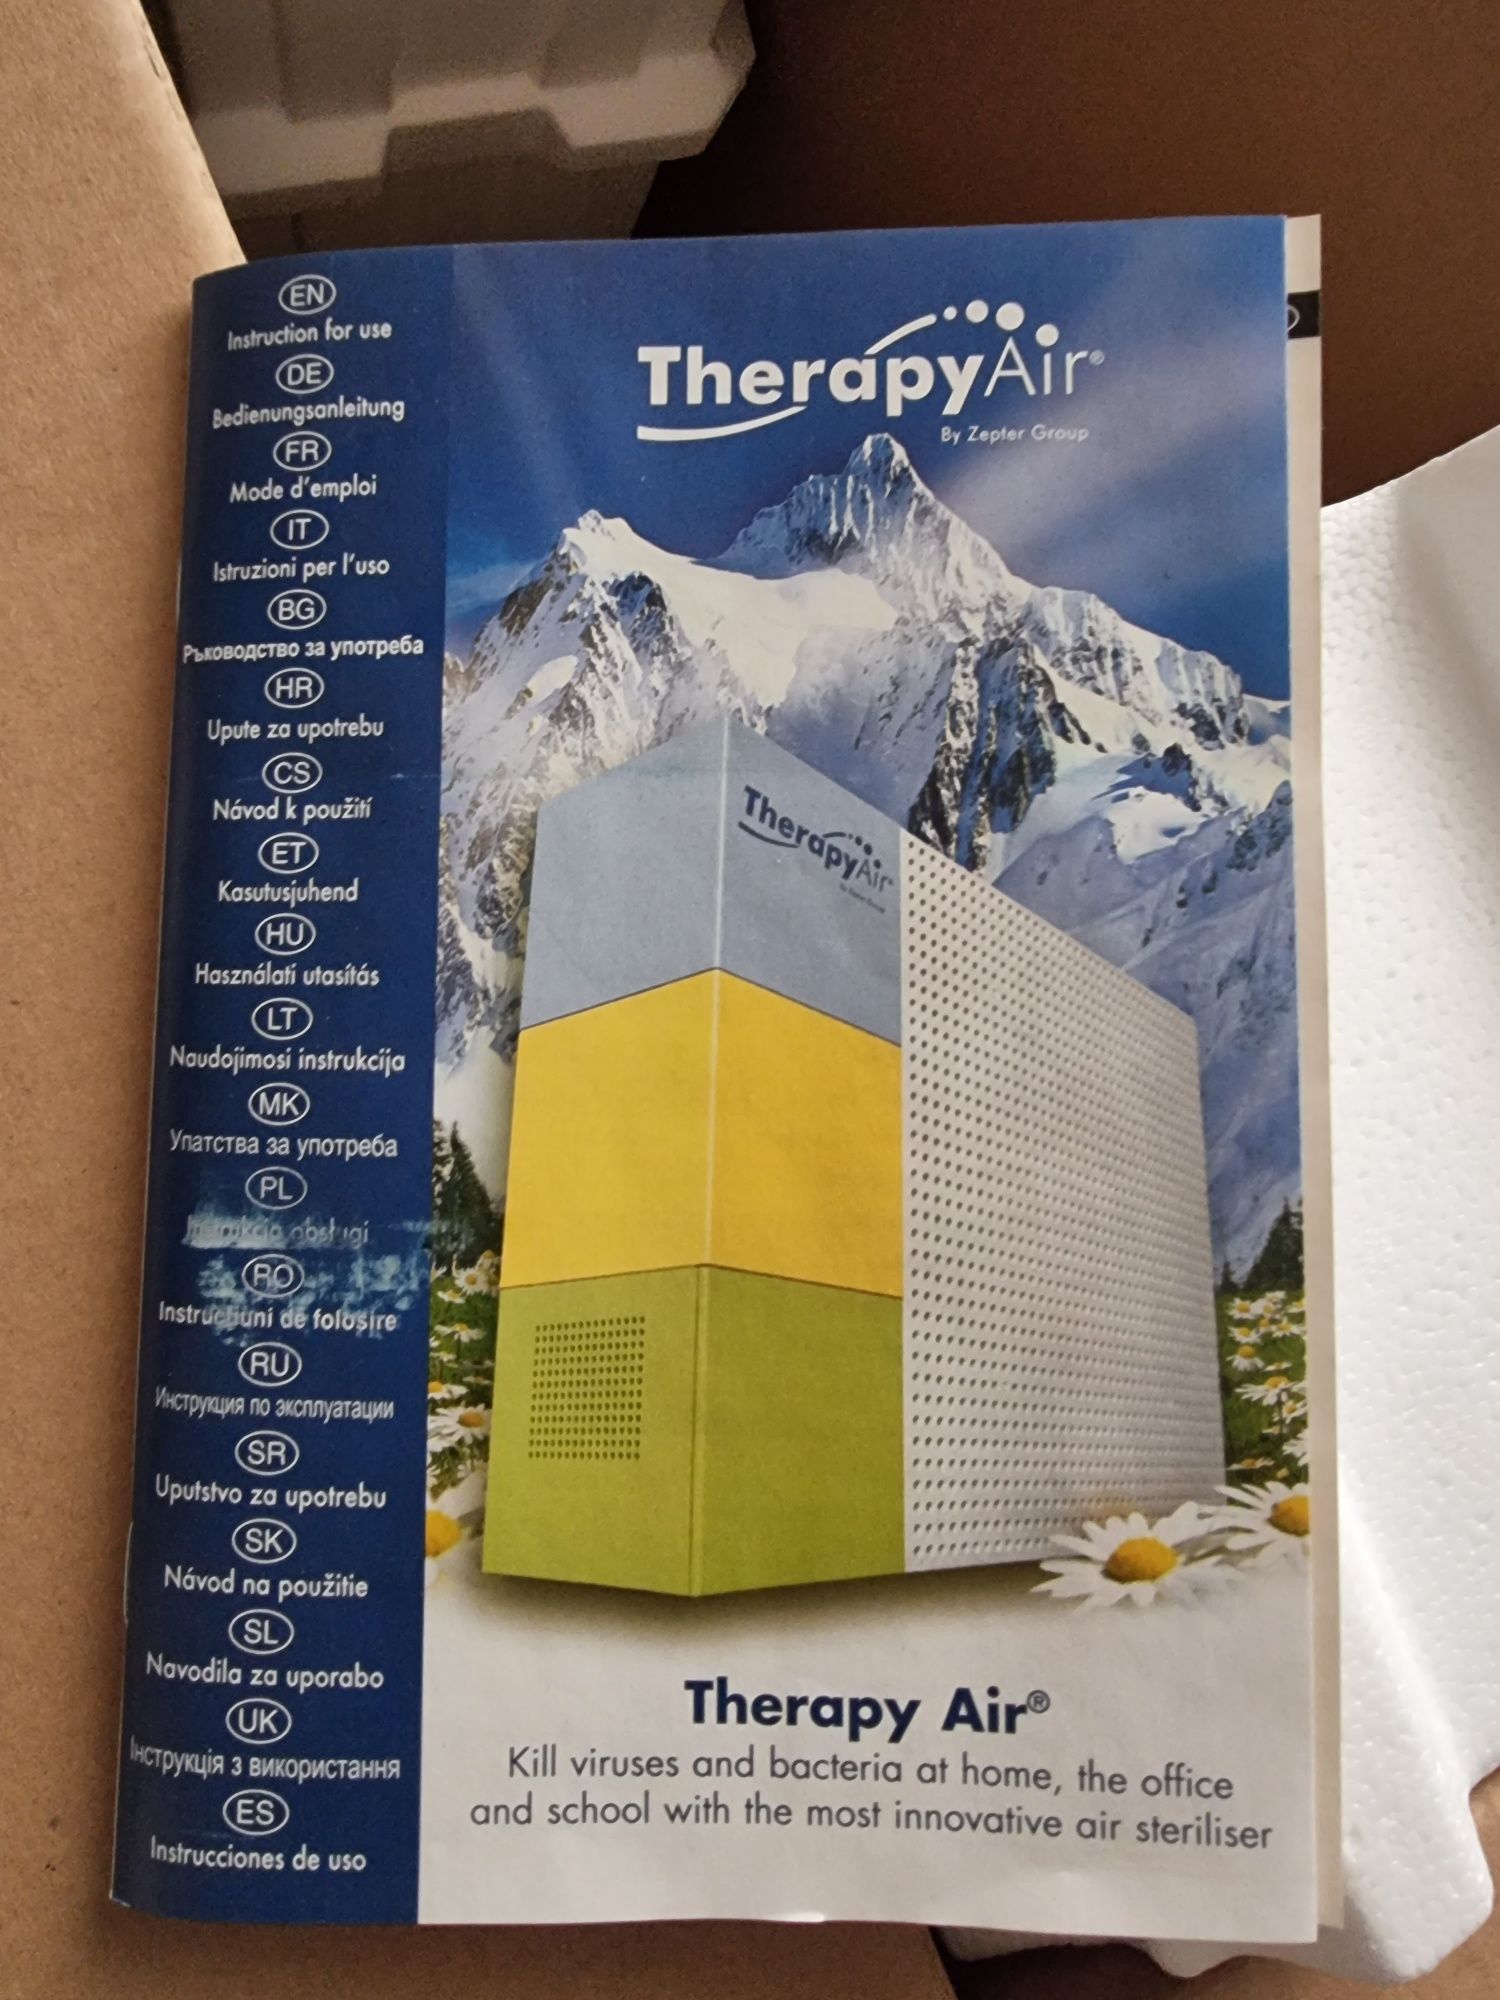 Zepter Therapy air pwc-503 очиститель воздуха